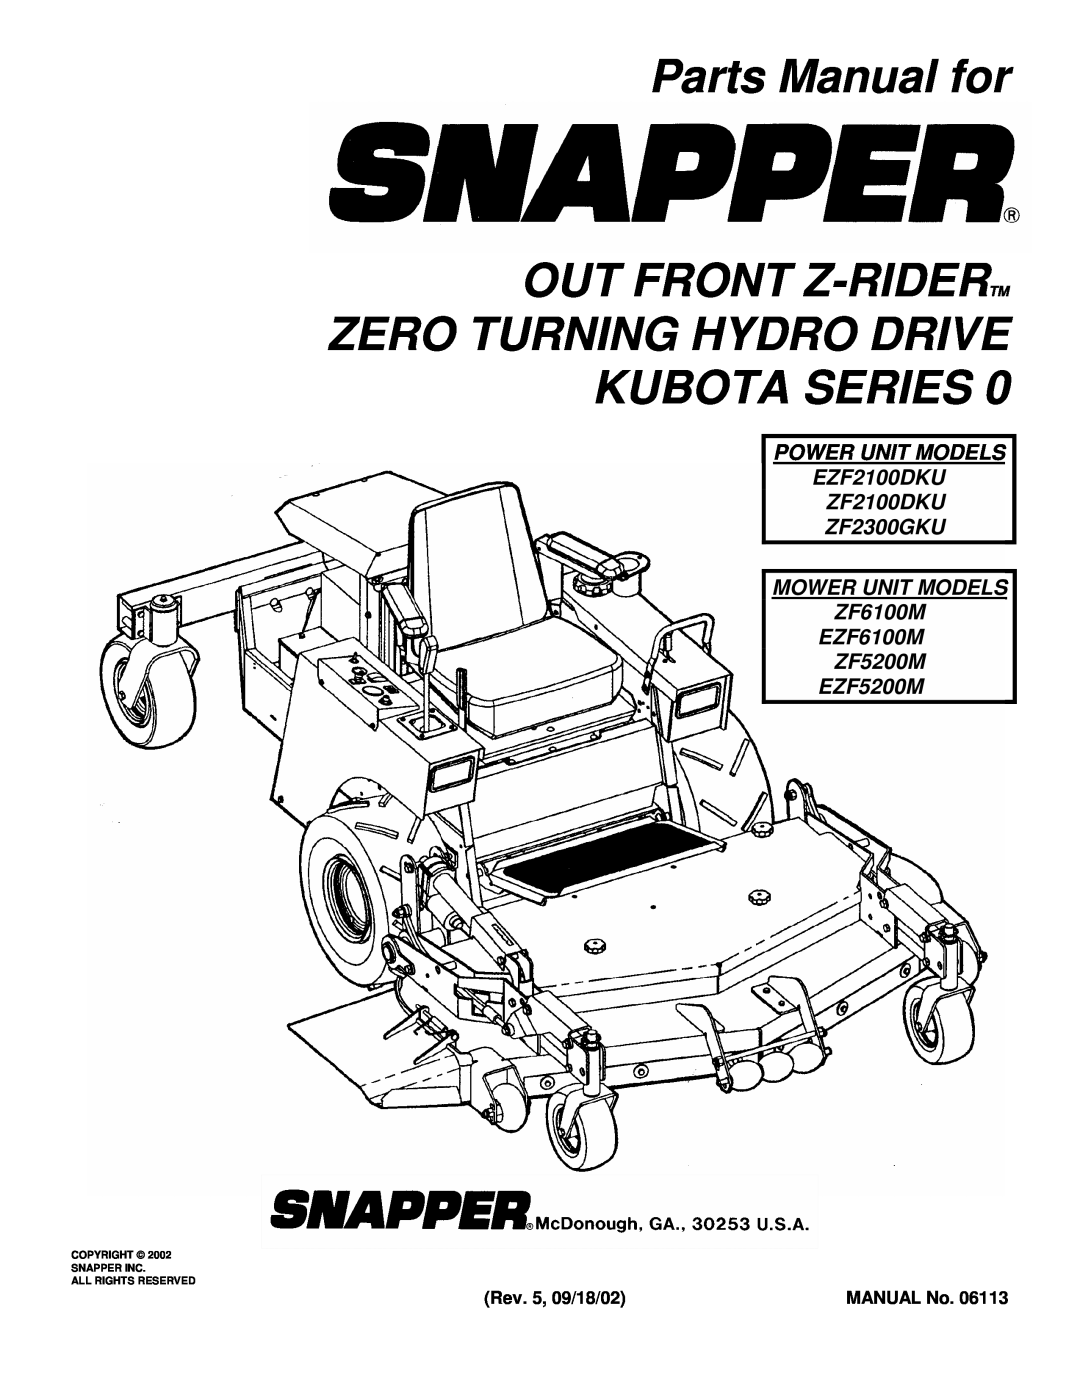 Snapper EZF5200M, EZF6100M, EZF2100DKU manual Parts Manual for OUT FRONT Z-RIDERTM, Zero Turning Hydro Drive Kubota Series 